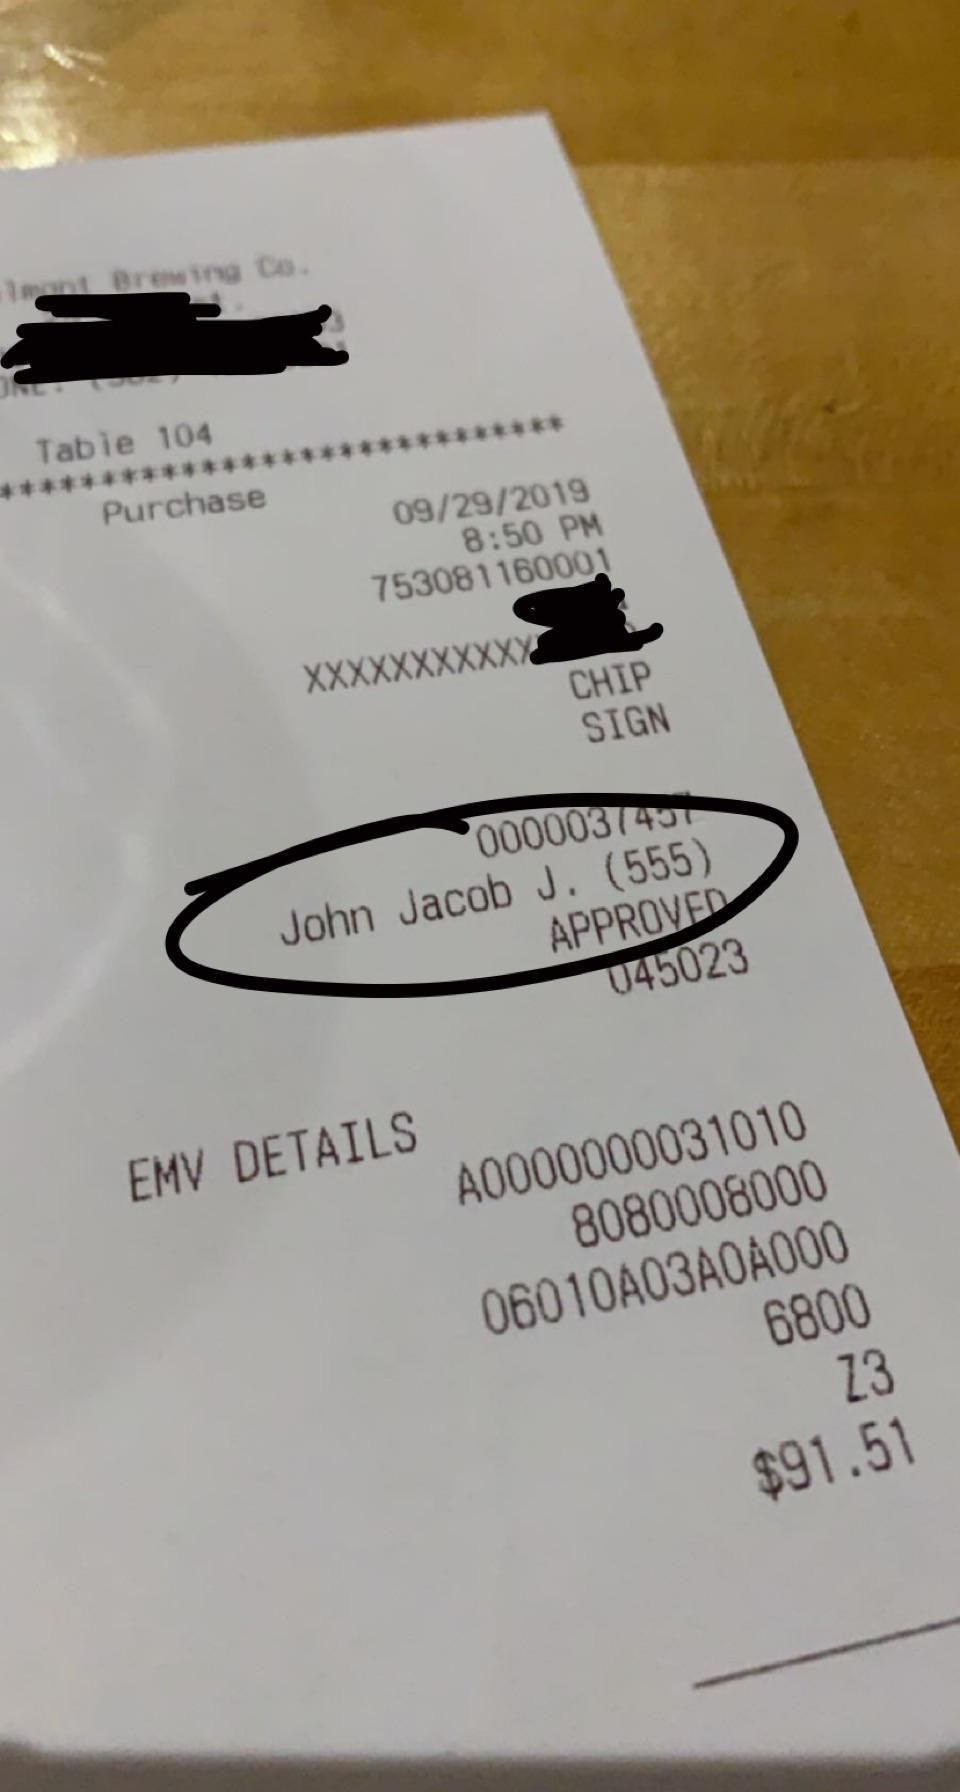 Do you think my waiter’s last name is Jingleheimerschmidt?